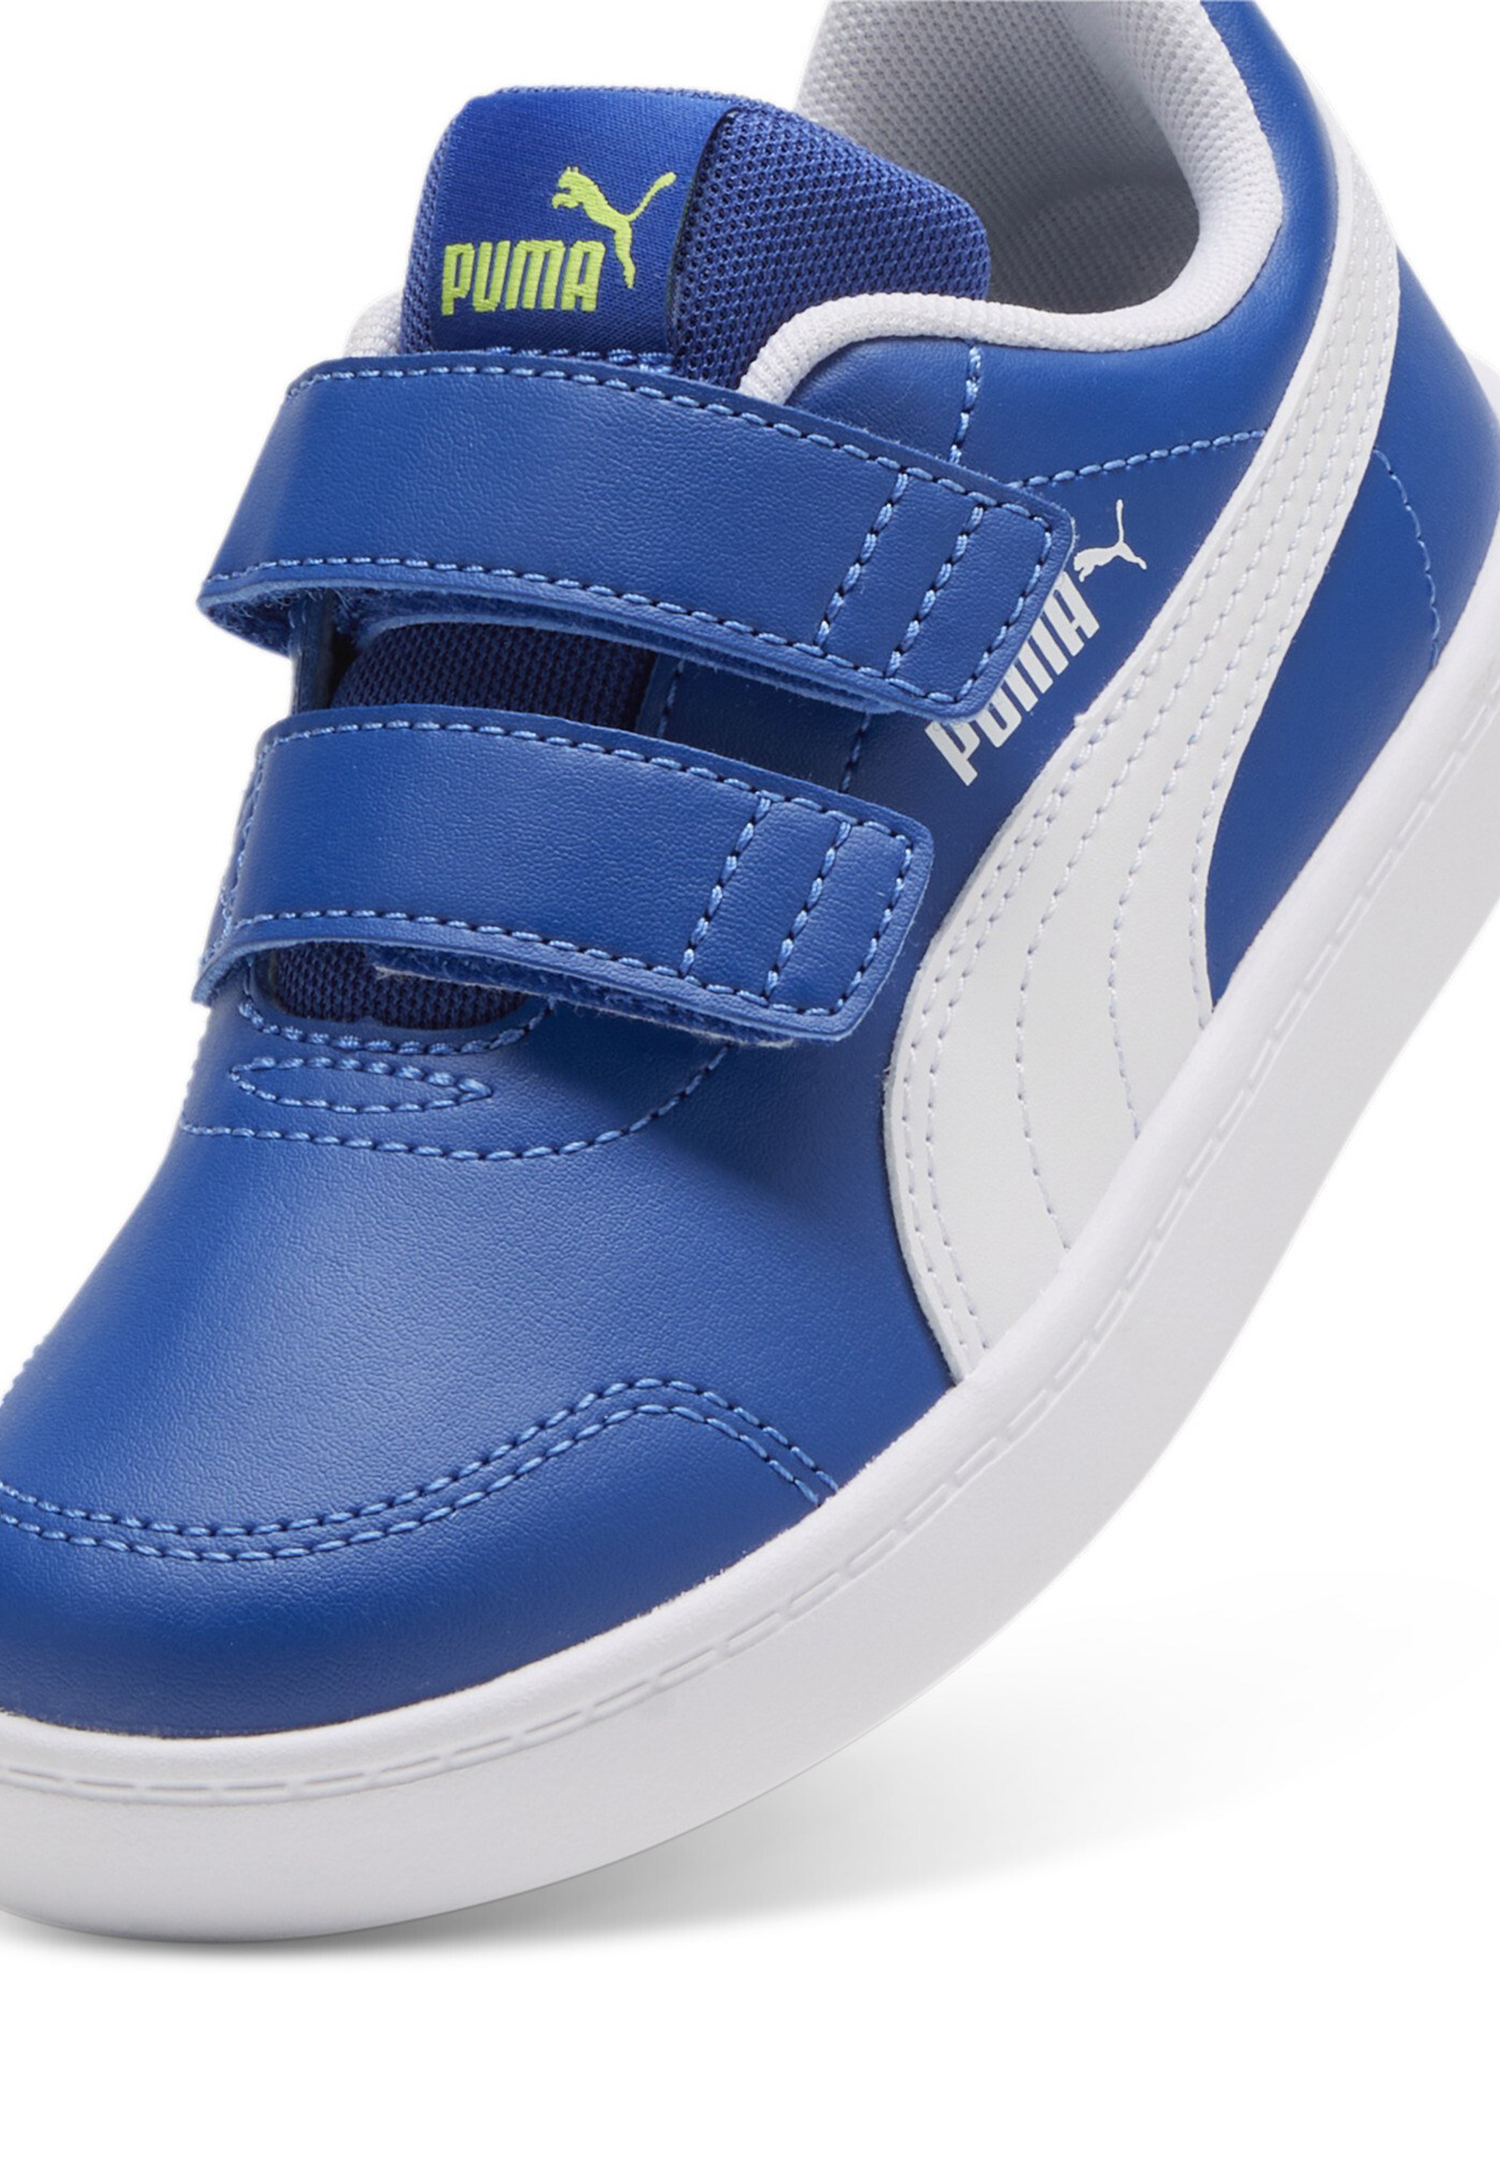 Puma Courtflex v2 V PS Kinder Unisex Sneaker Turnschuh 371543 33 blau/weiß